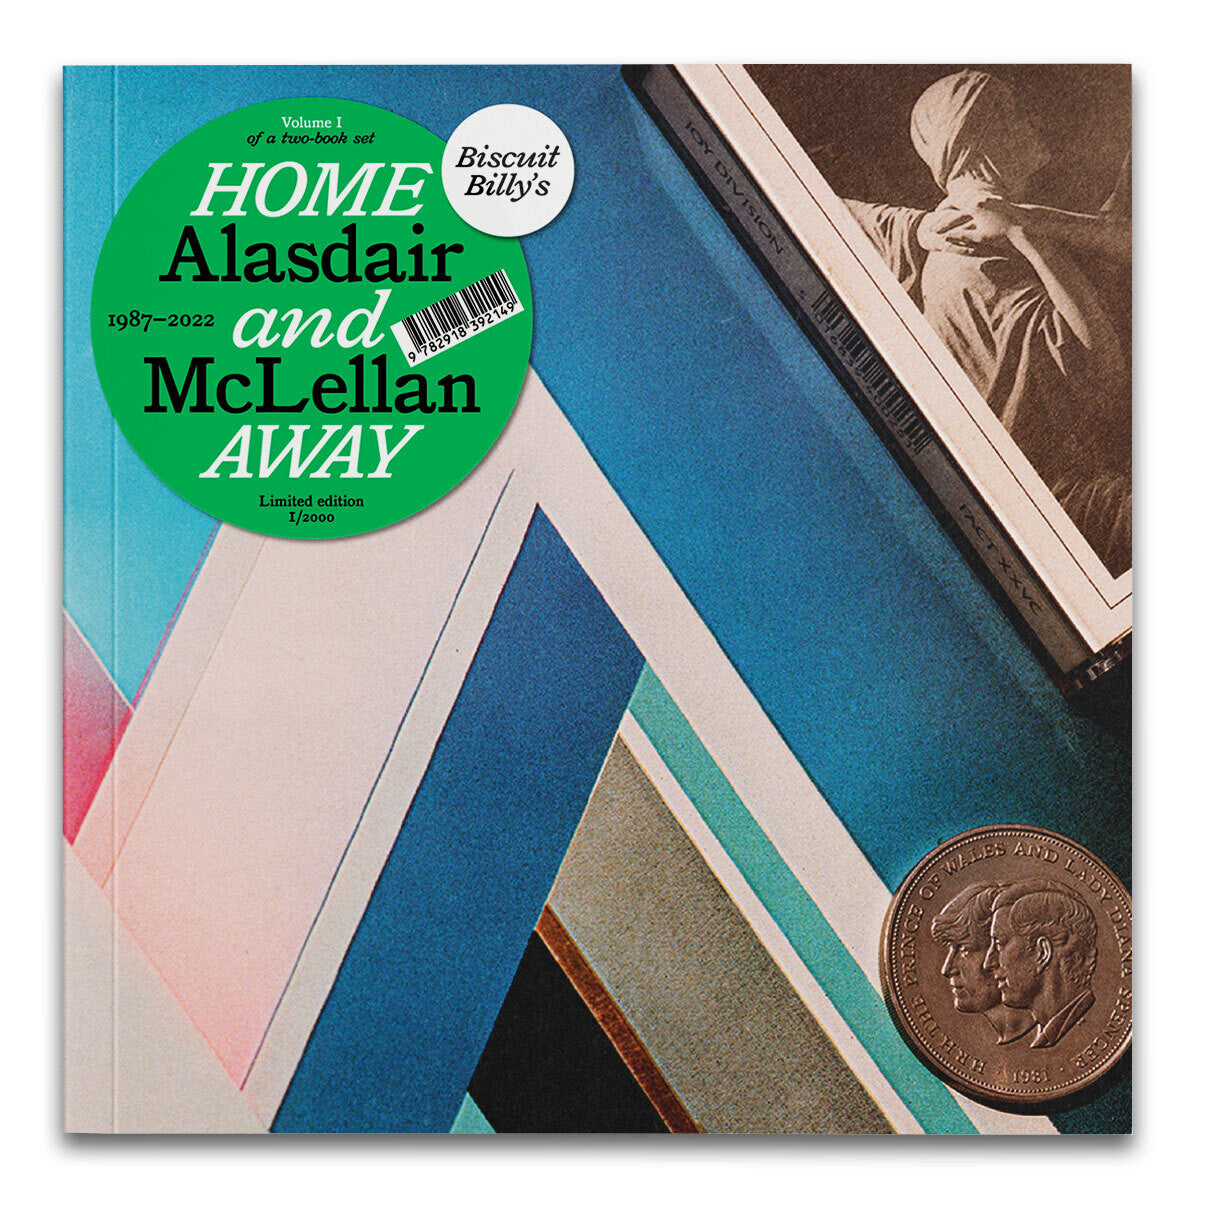 Alasdair McLellan - HOME and AWAY Volume I: Biscuit Billy's